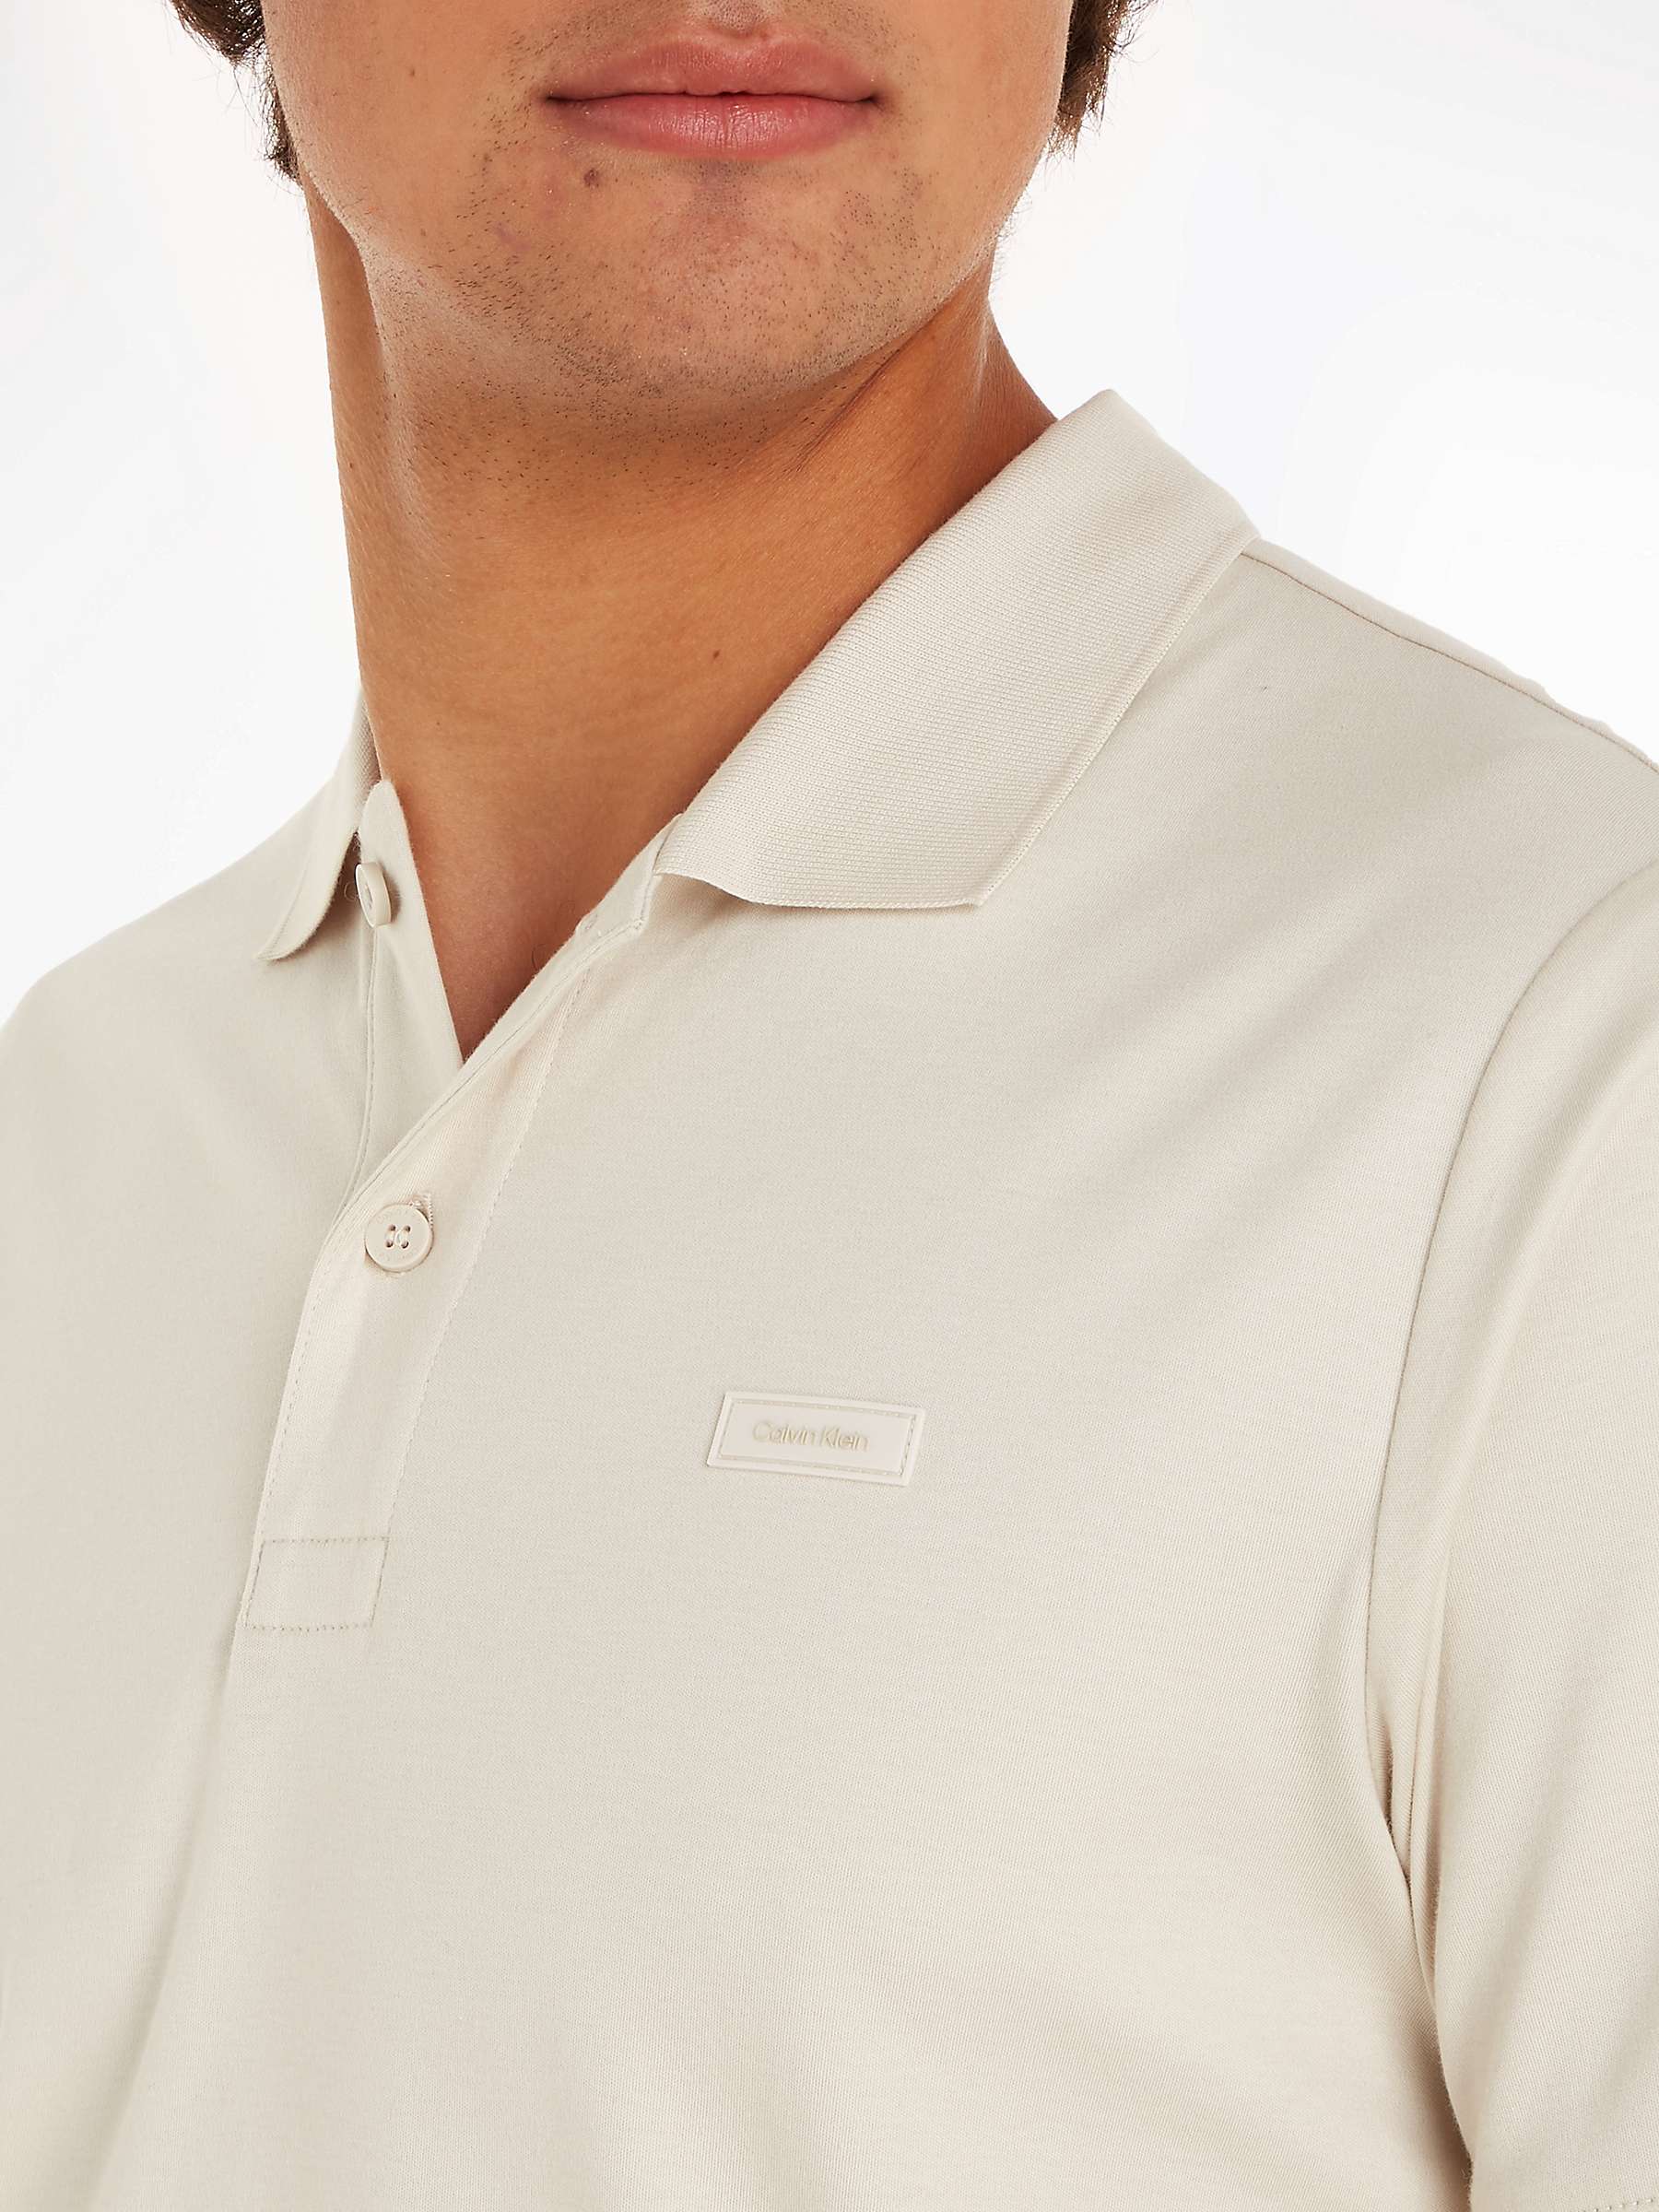 Buy Calvin Klein Slim Fit Polo Shirt Online at johnlewis.com